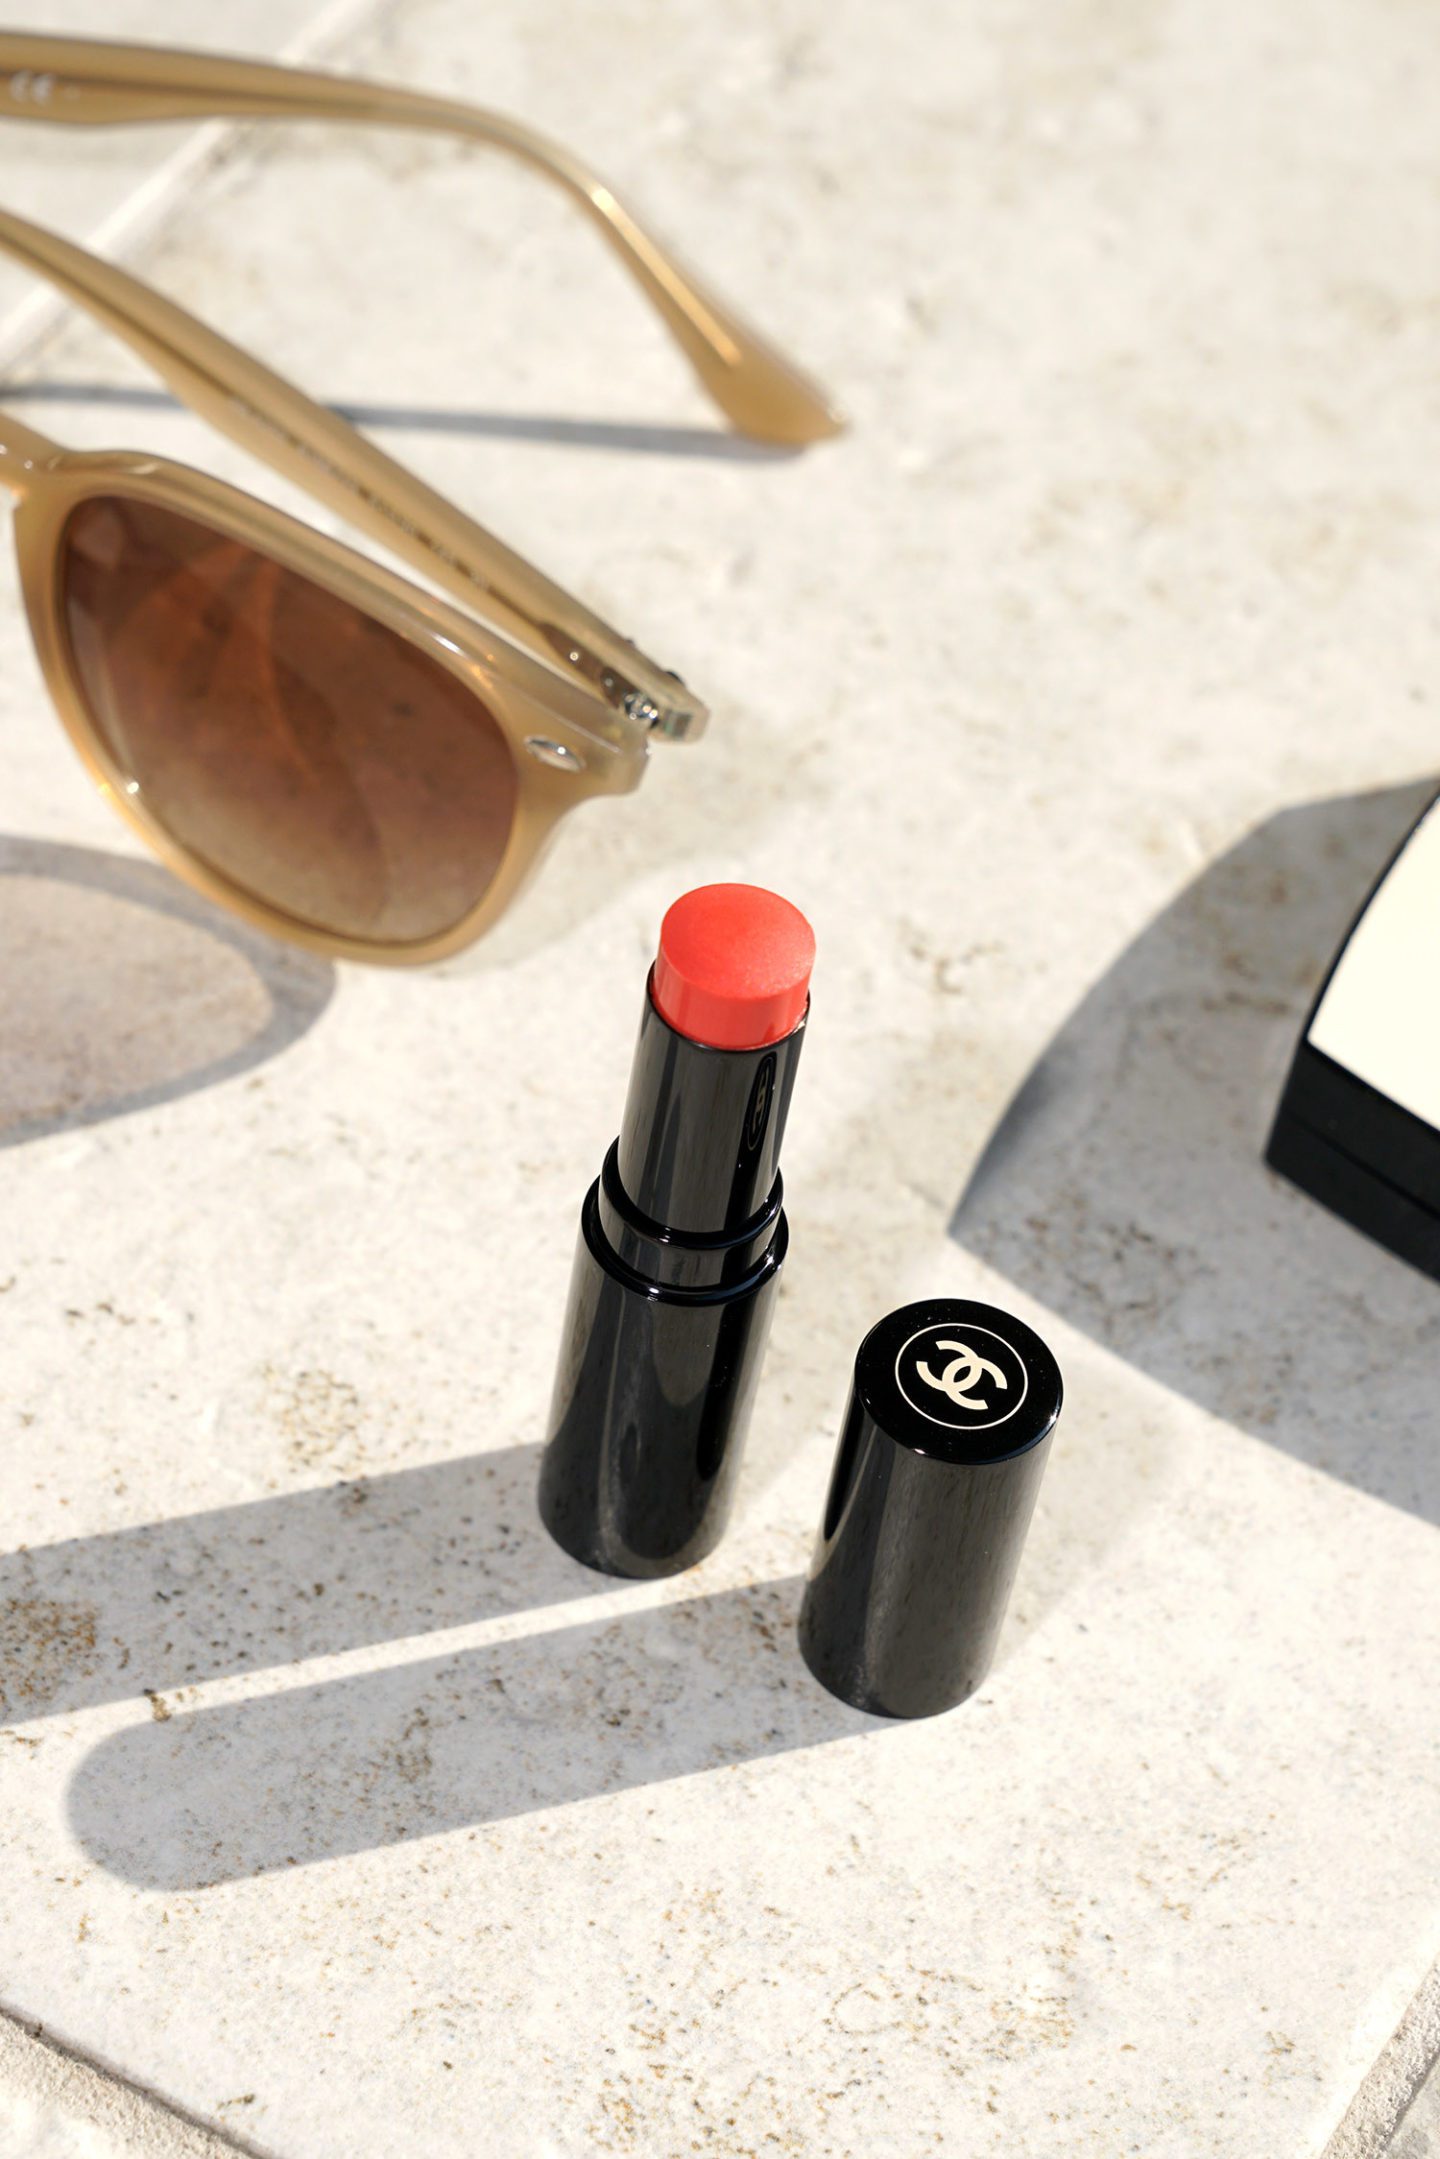 Chanel Les Beiges Healthy Glow Lip Balm in Warm